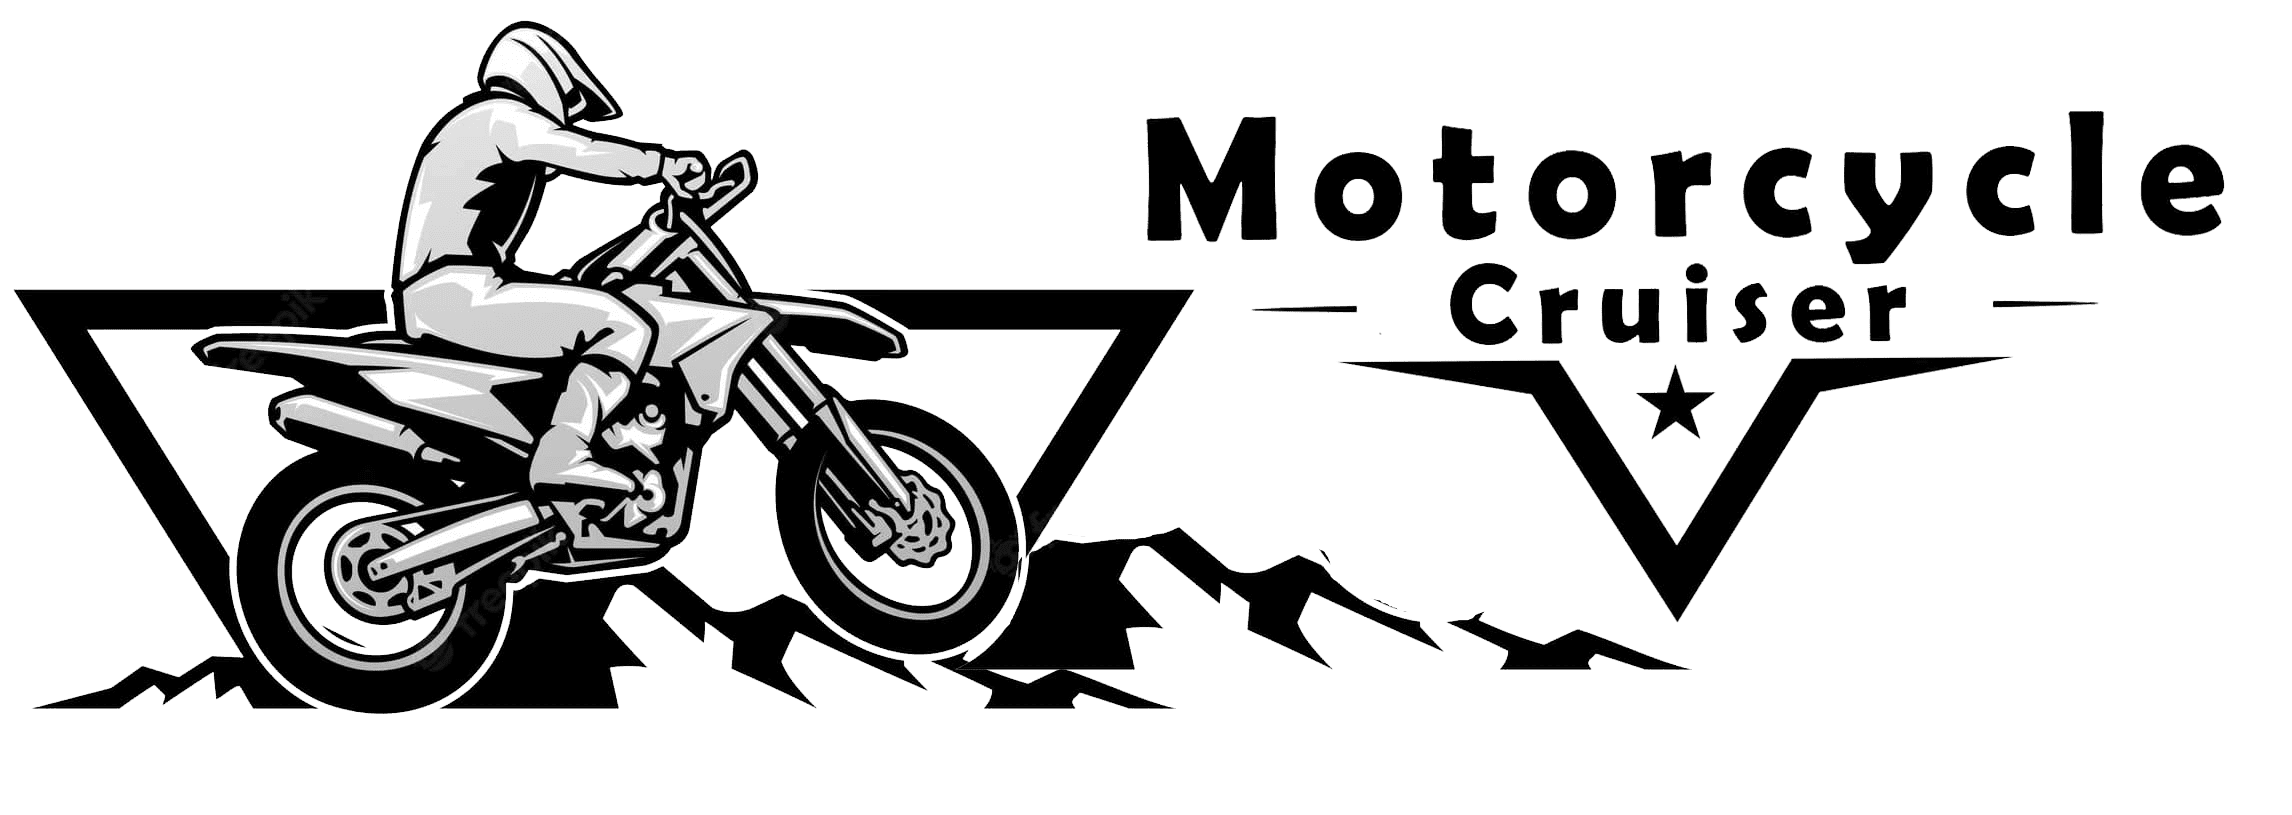 Motorcycle cruiser LTD